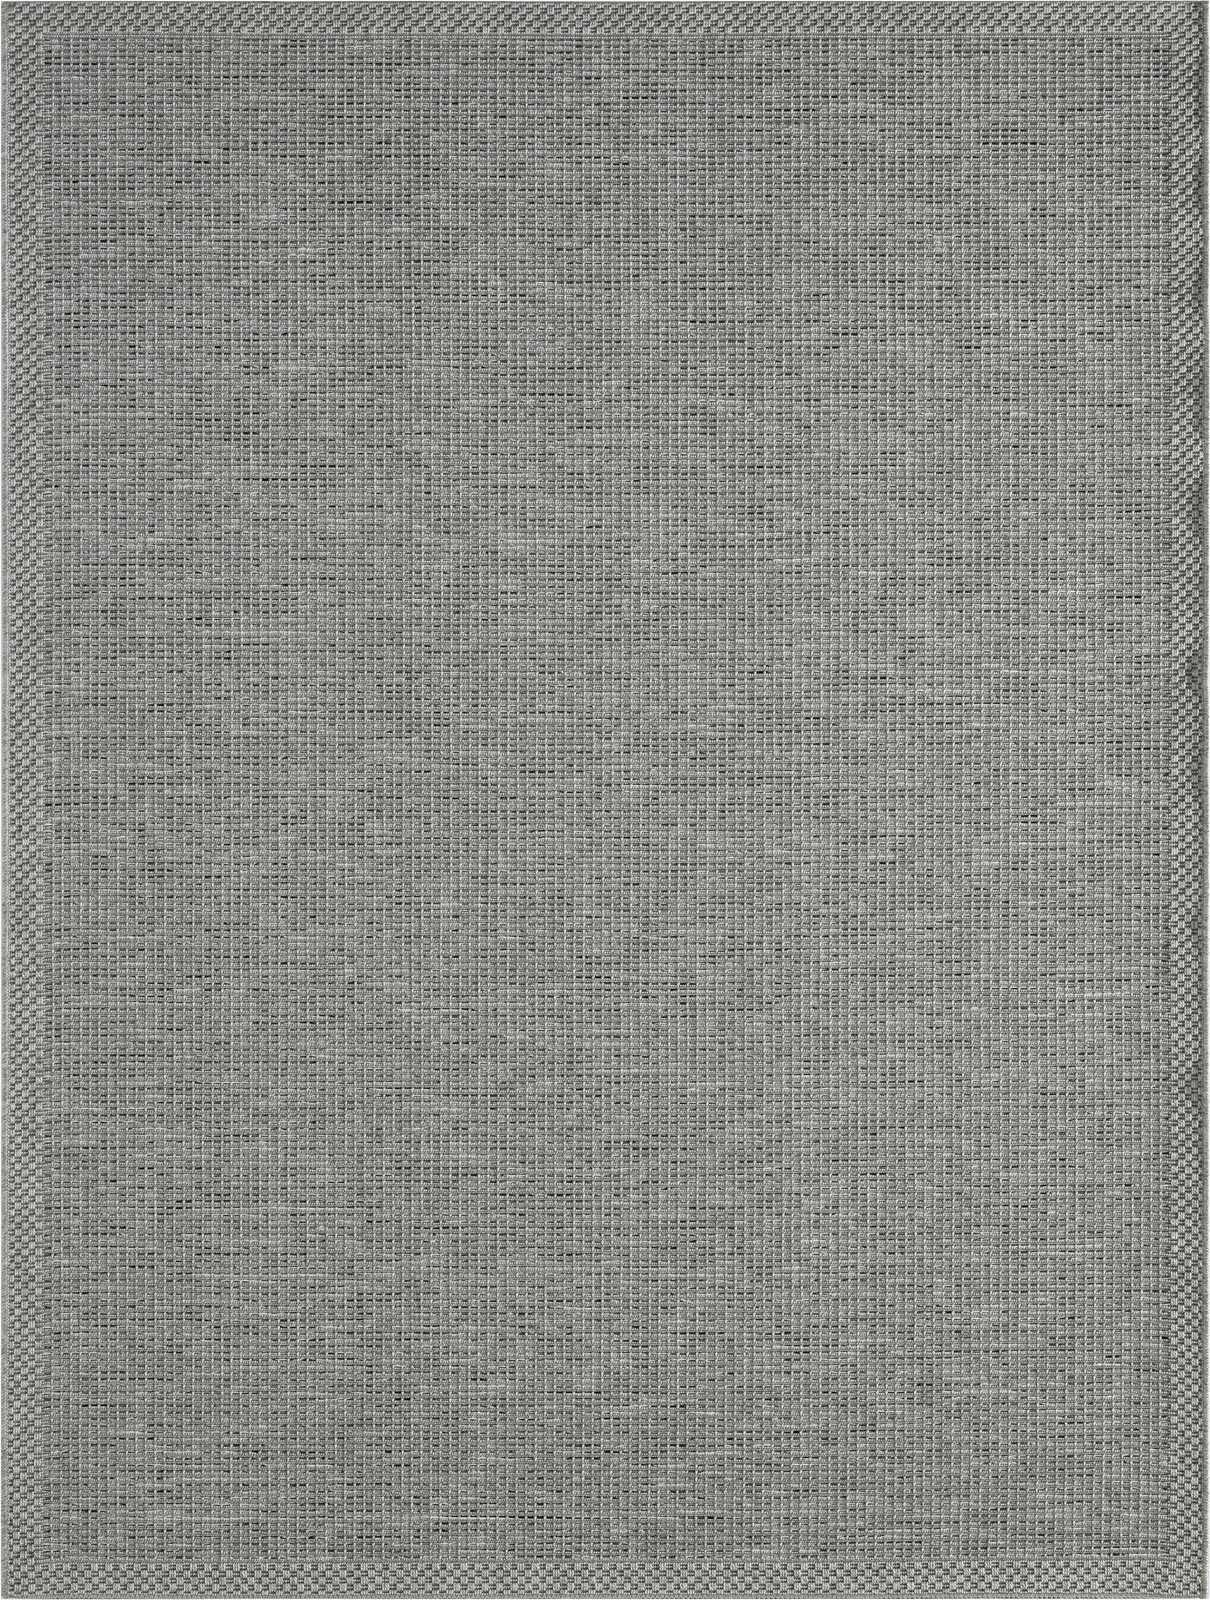             Plain Carpet in Grey - 280 x 200 cm
        